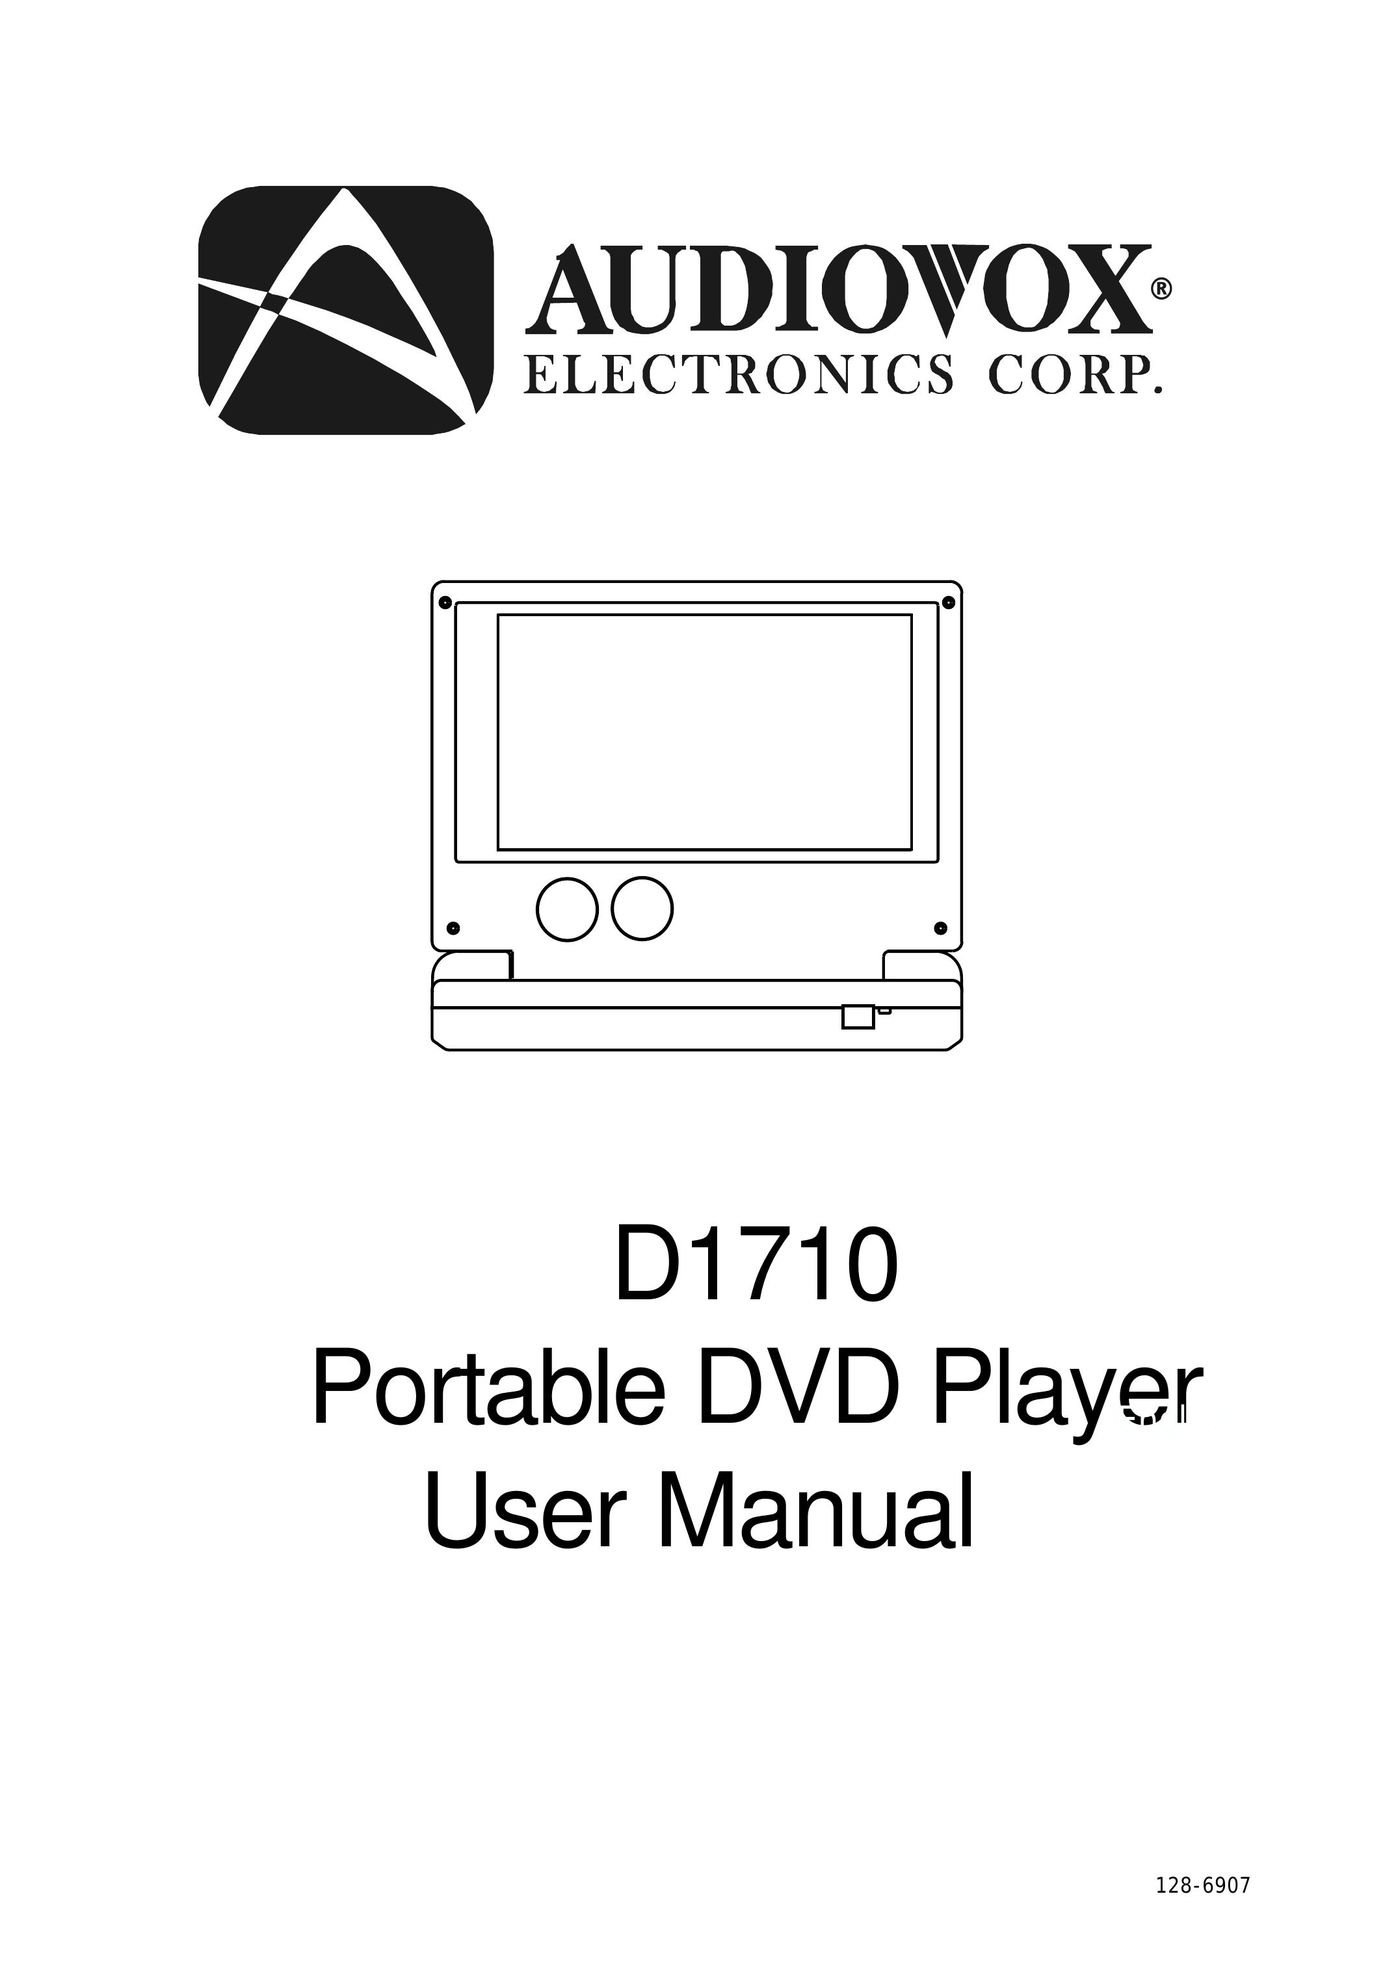 Audiovox D1710 Portable DVD Player User Manual